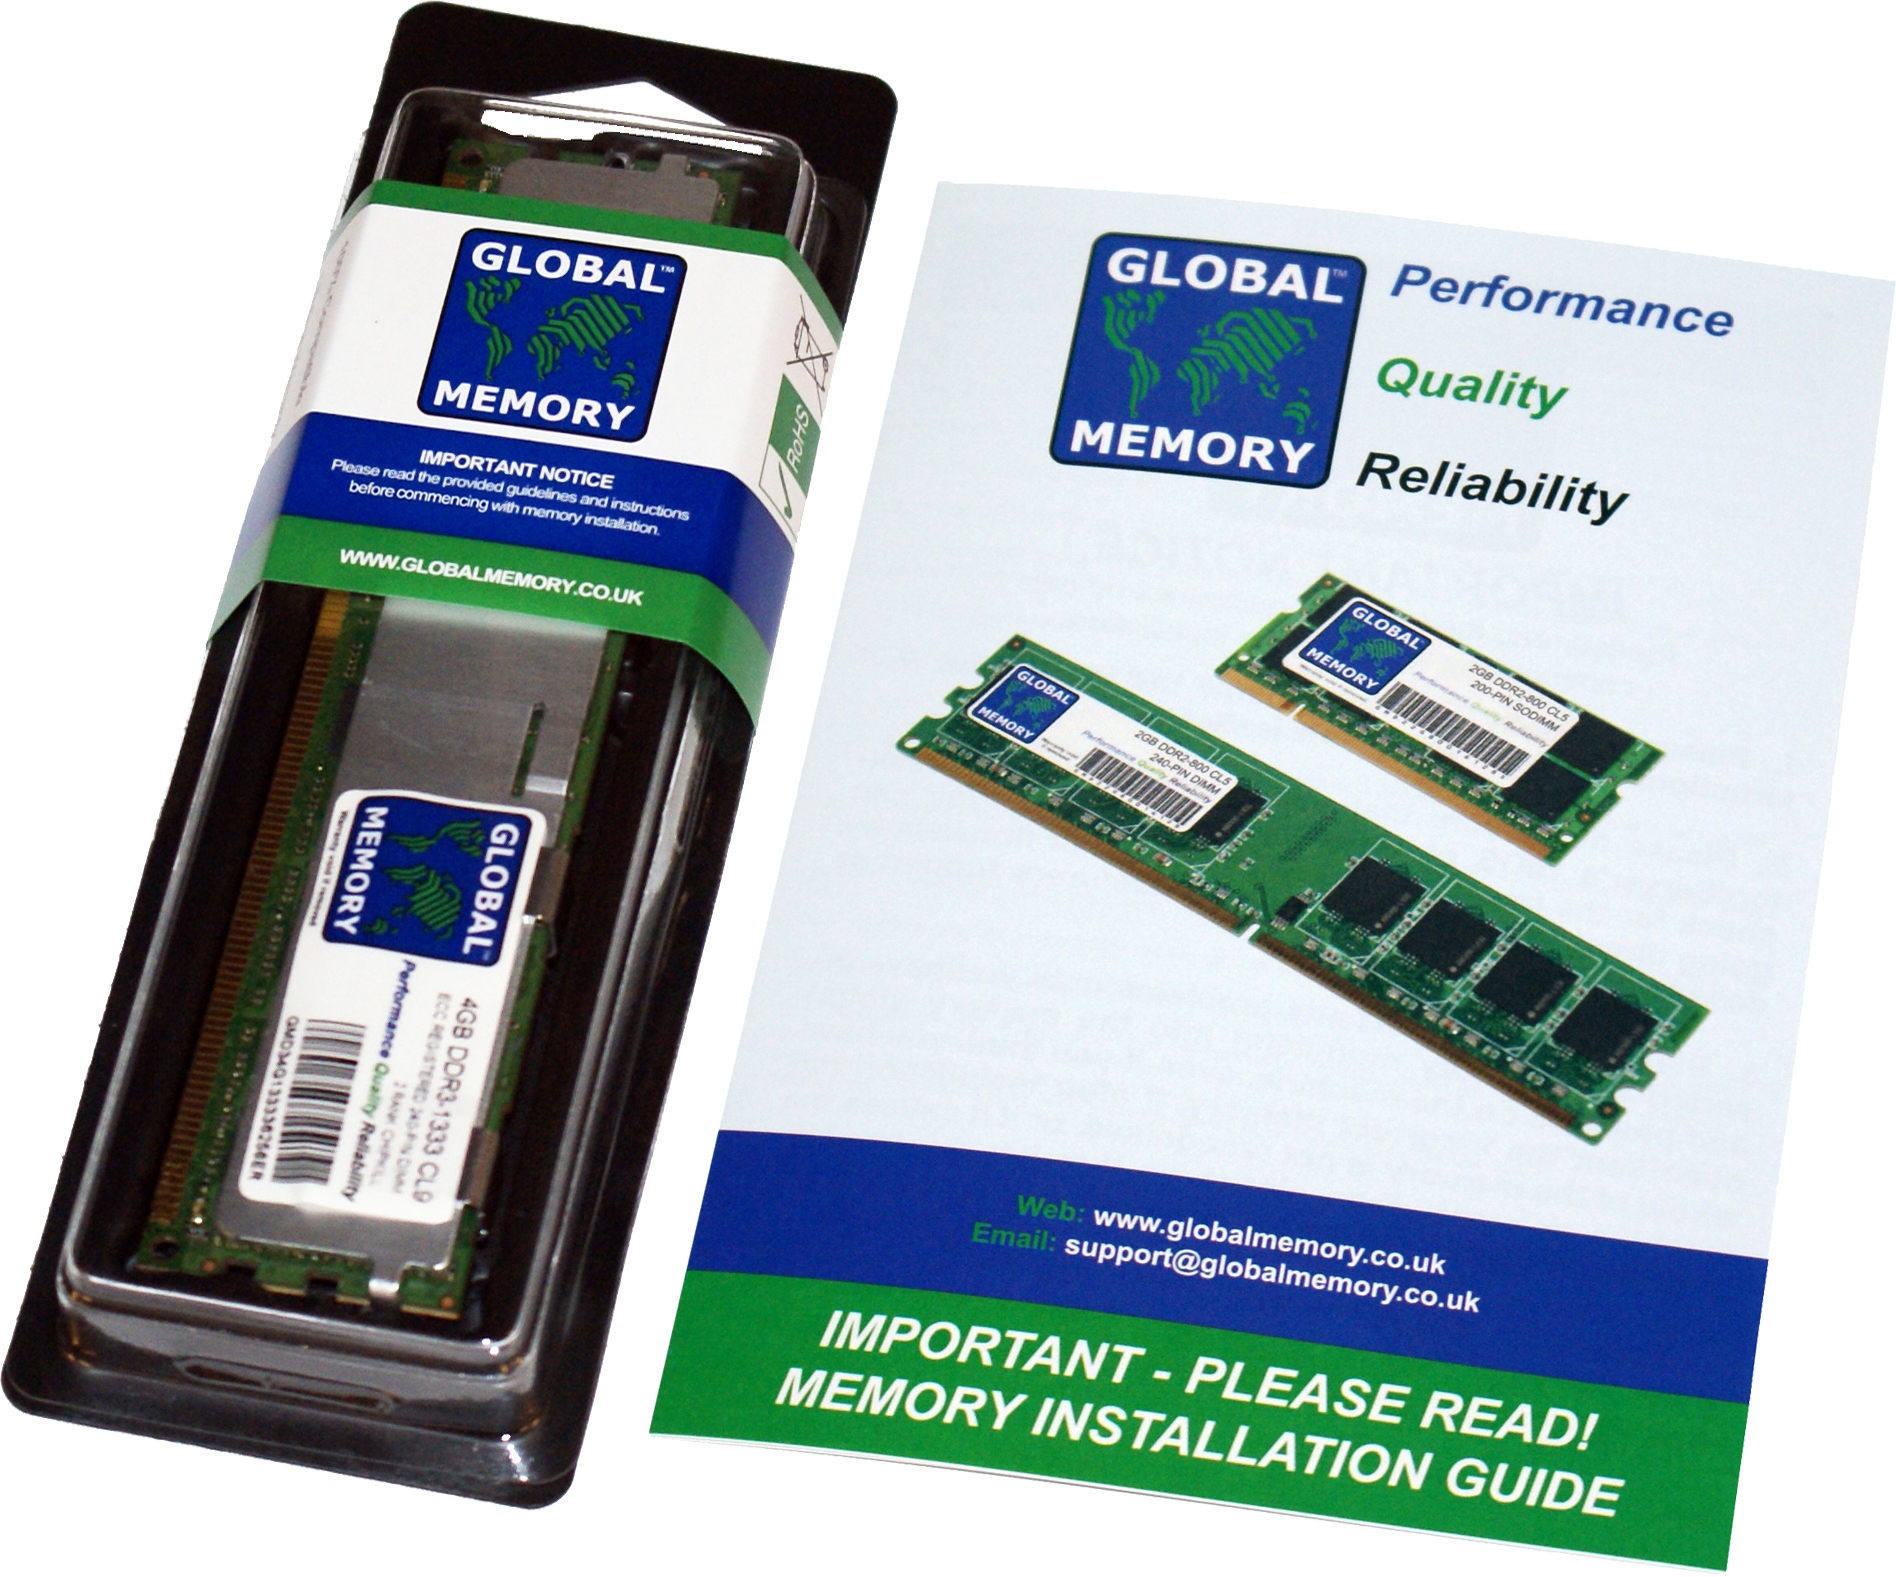 16GB DDR3 1333MHz PC3-10600 240-PIN ECC REGISTERED DIMM (RDIMM) MEMORY RAM FOR SUN SERVERS/WORKSTATIONS (4 RANK NON-CHIPKILL)